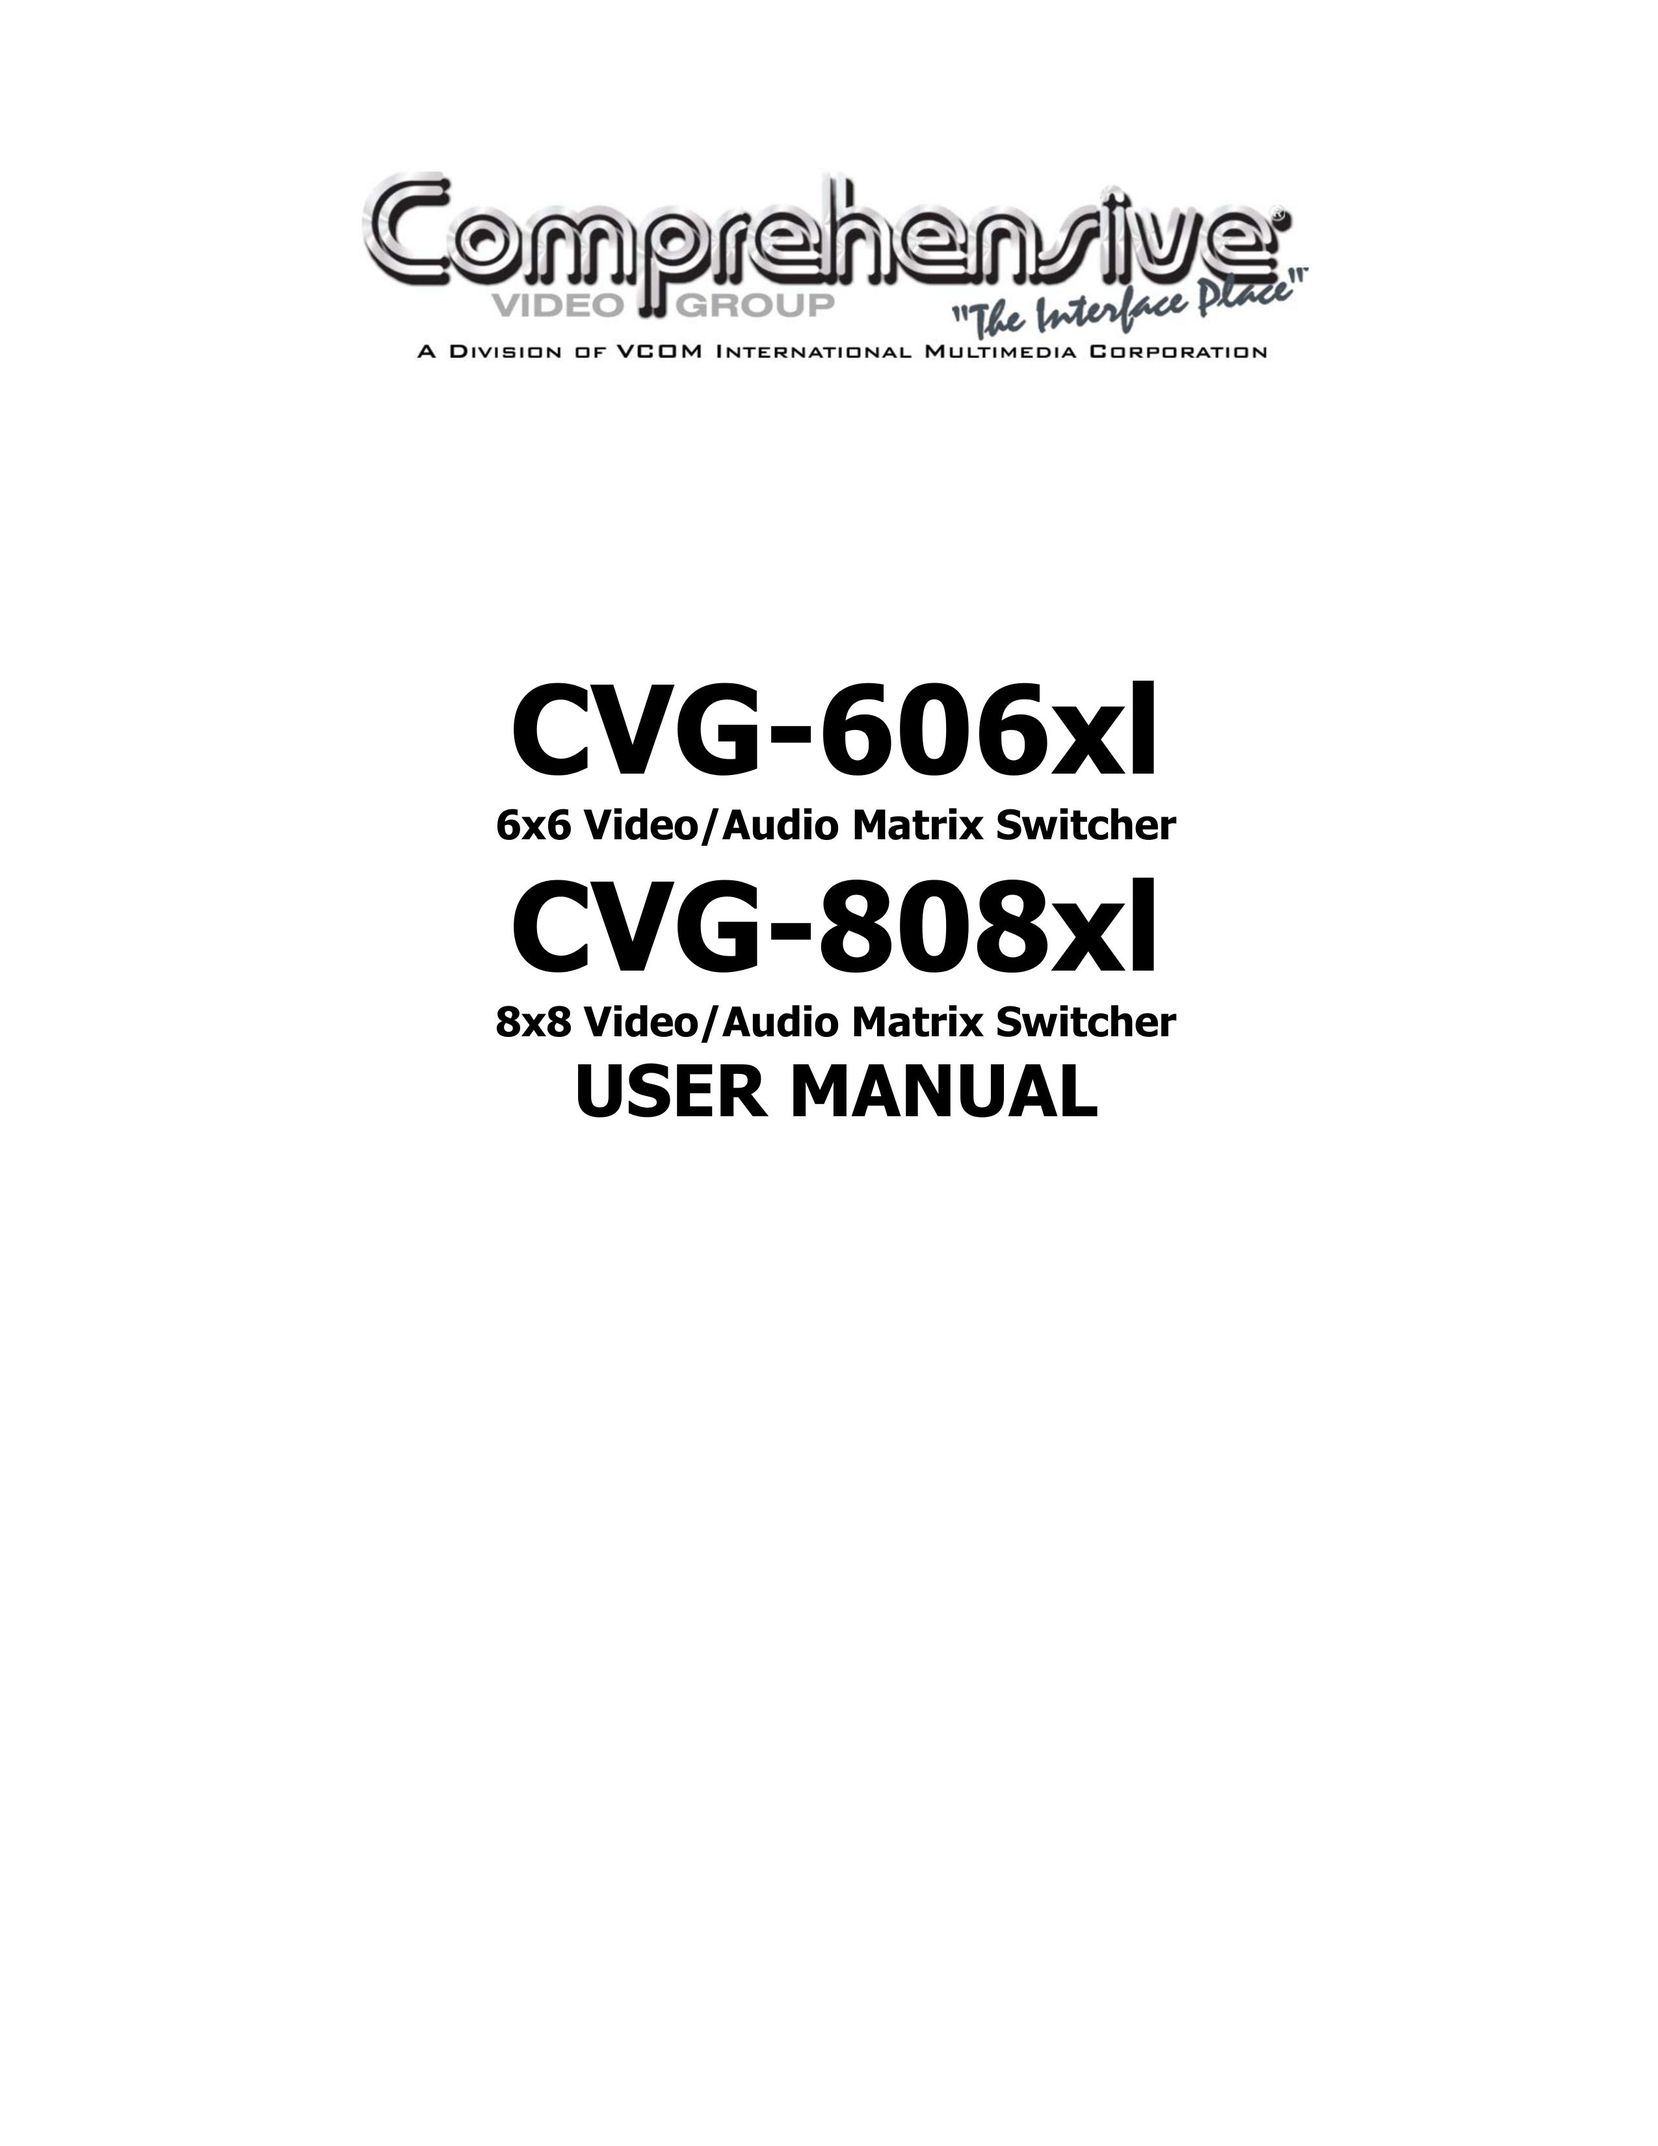 Comprehensive Video CVG-606xl Switch User Manual